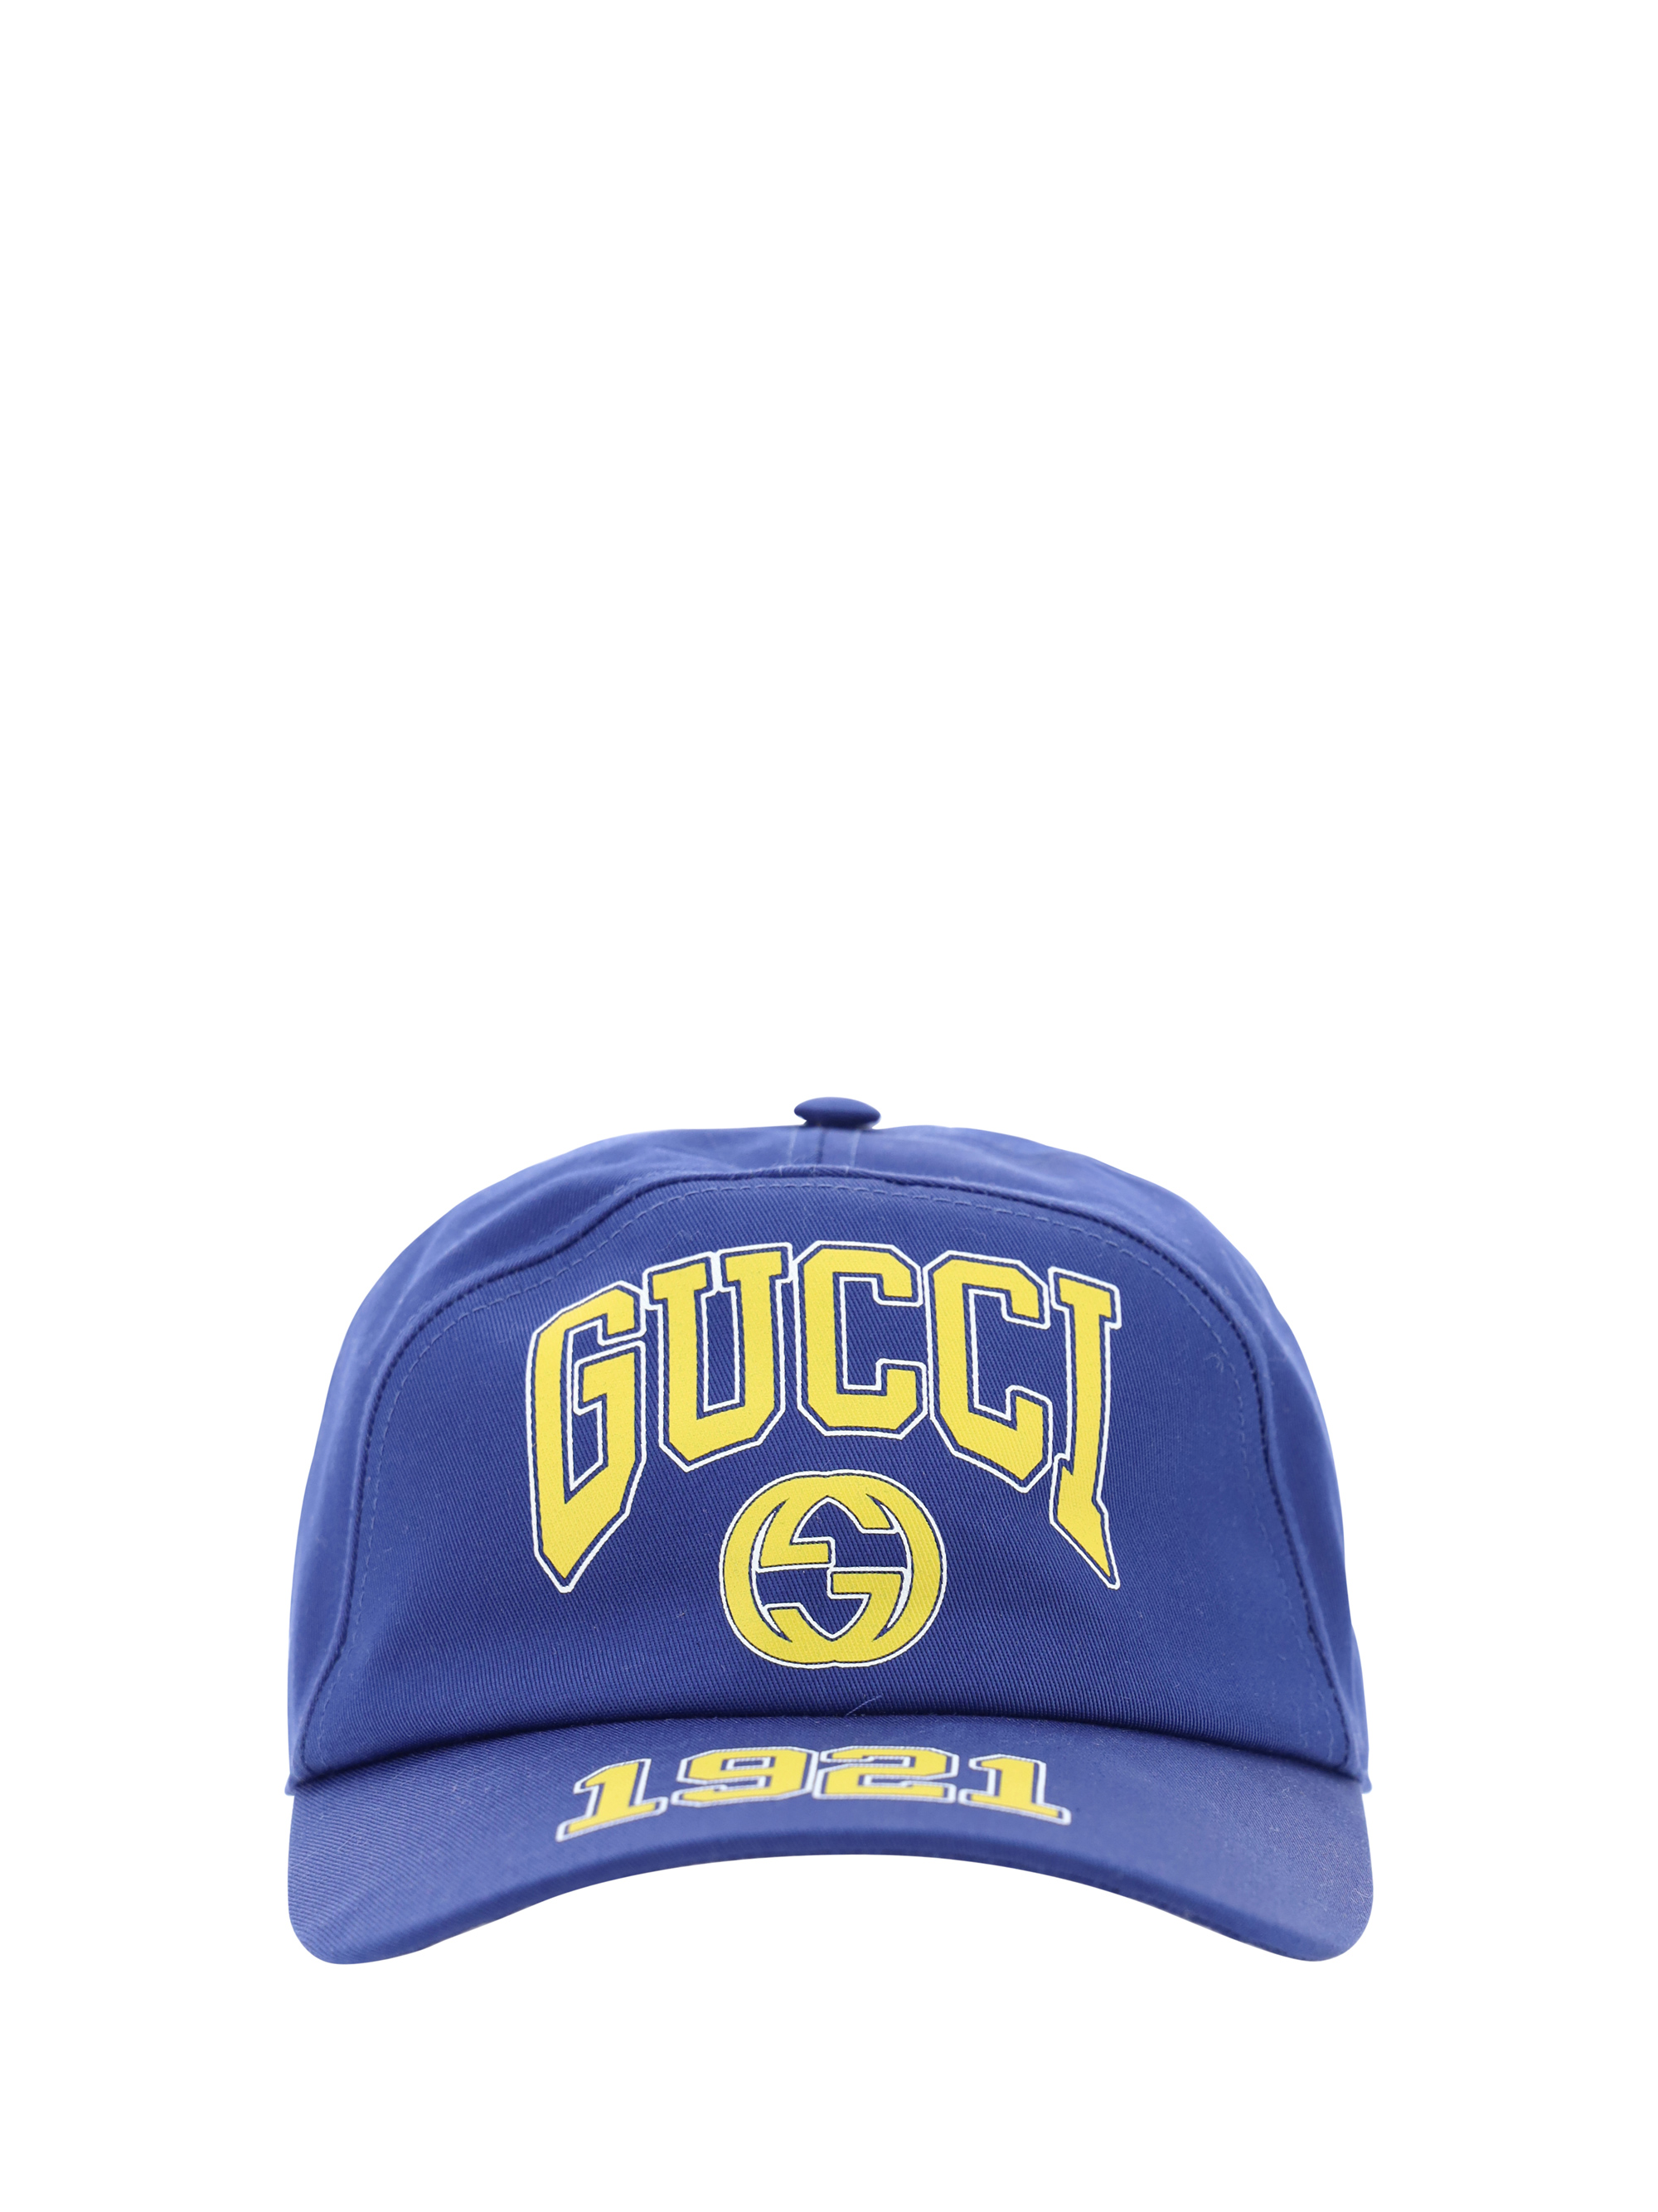 gucci - college baseball cap